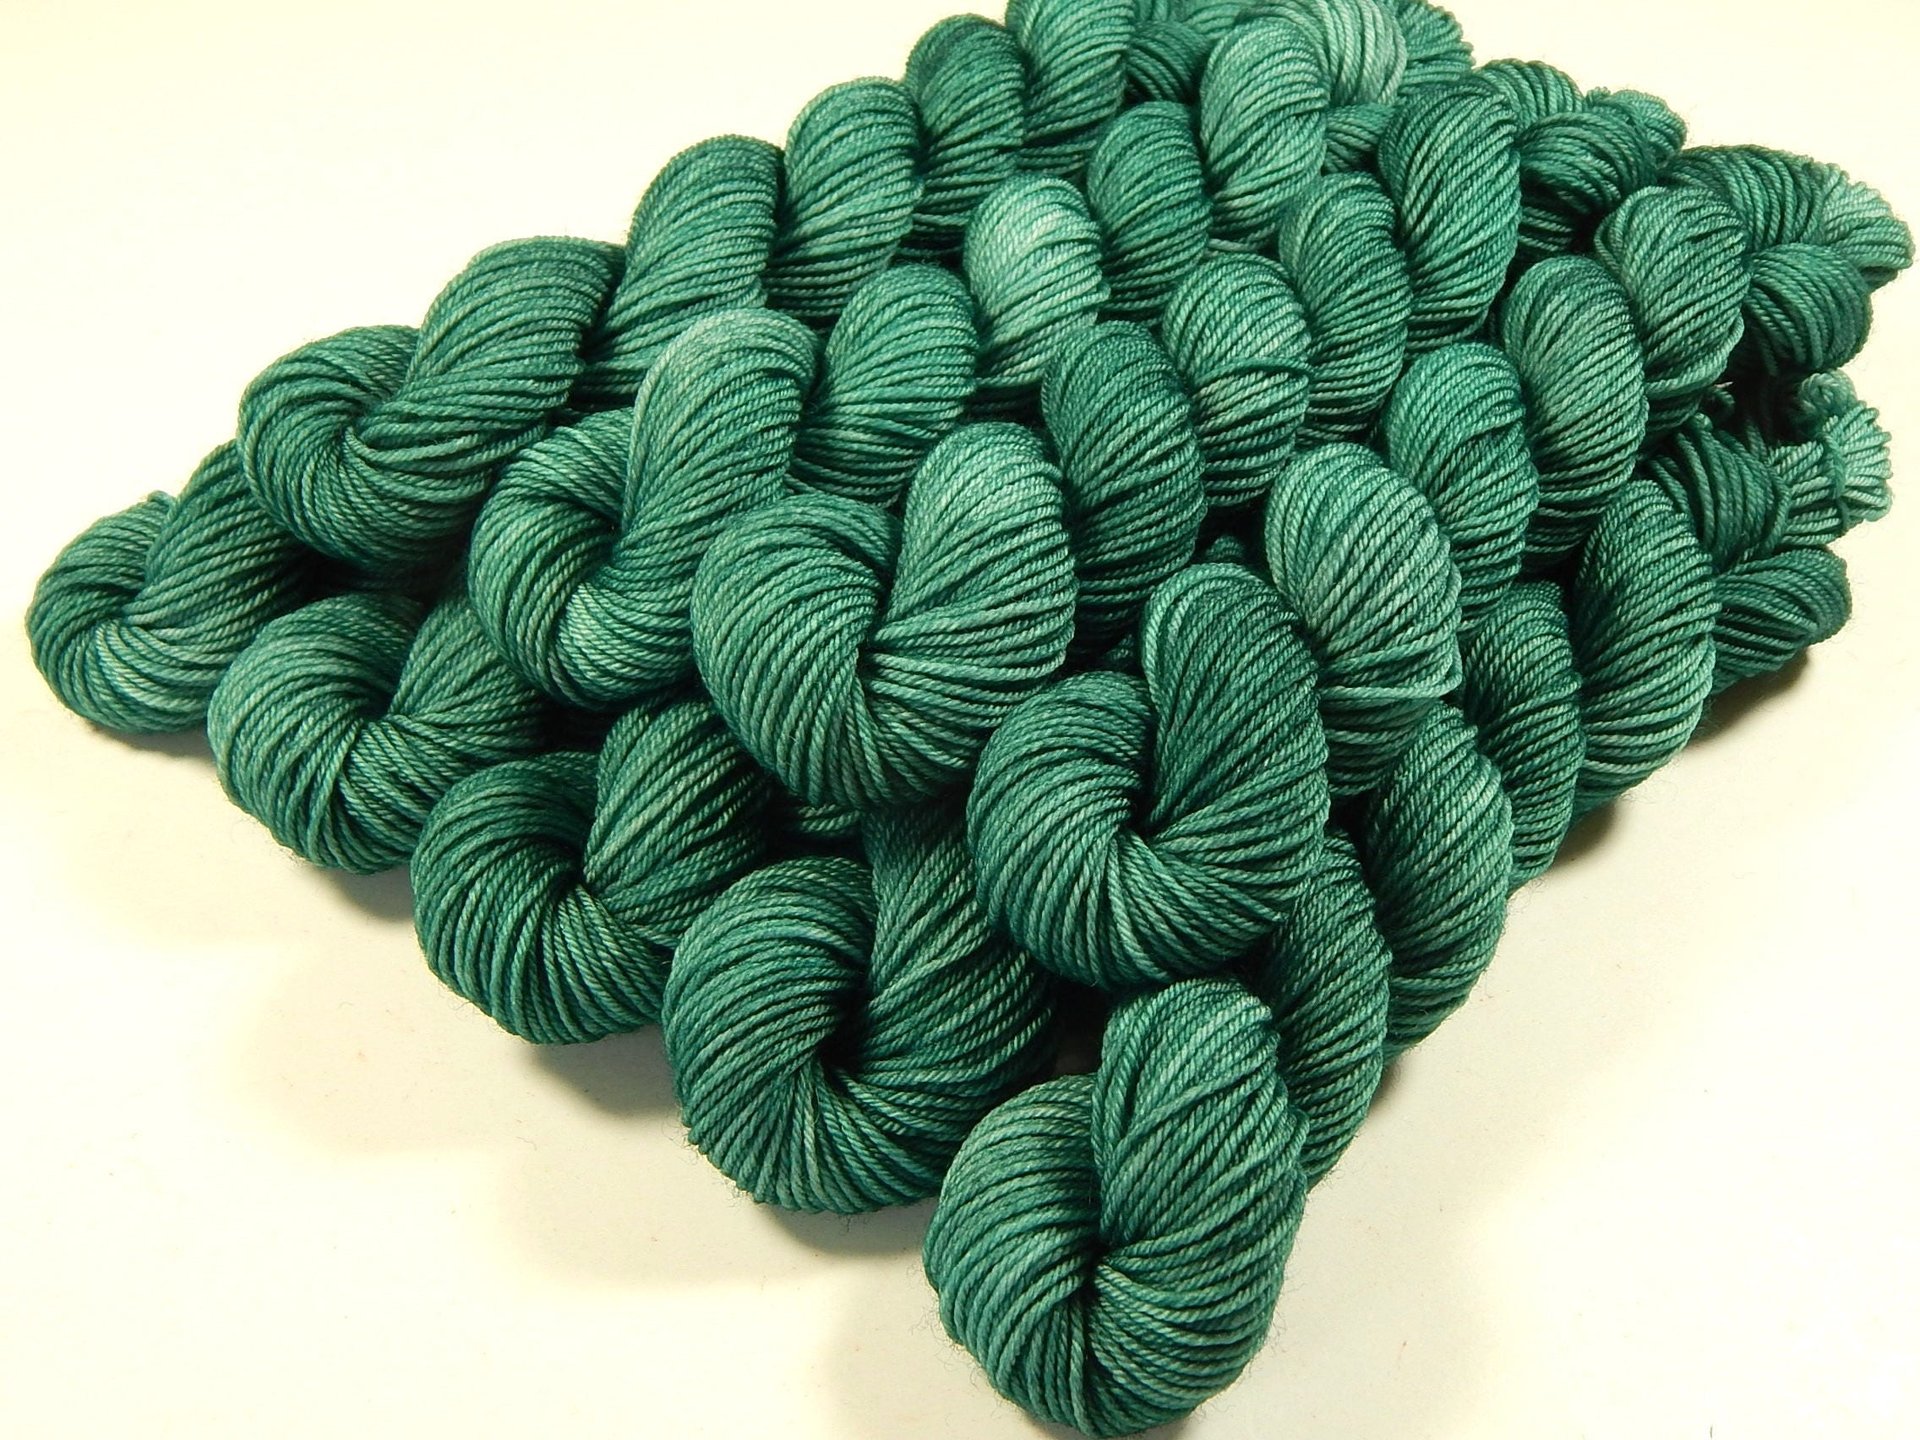 Sock Yarn Mini Skeins, Hand Dyed Yarn, Fingering Weight 4 Ply Superwash Merino Wool - Bluegrass - Mini Skein Knitting Yarn, Teal Green Tonal